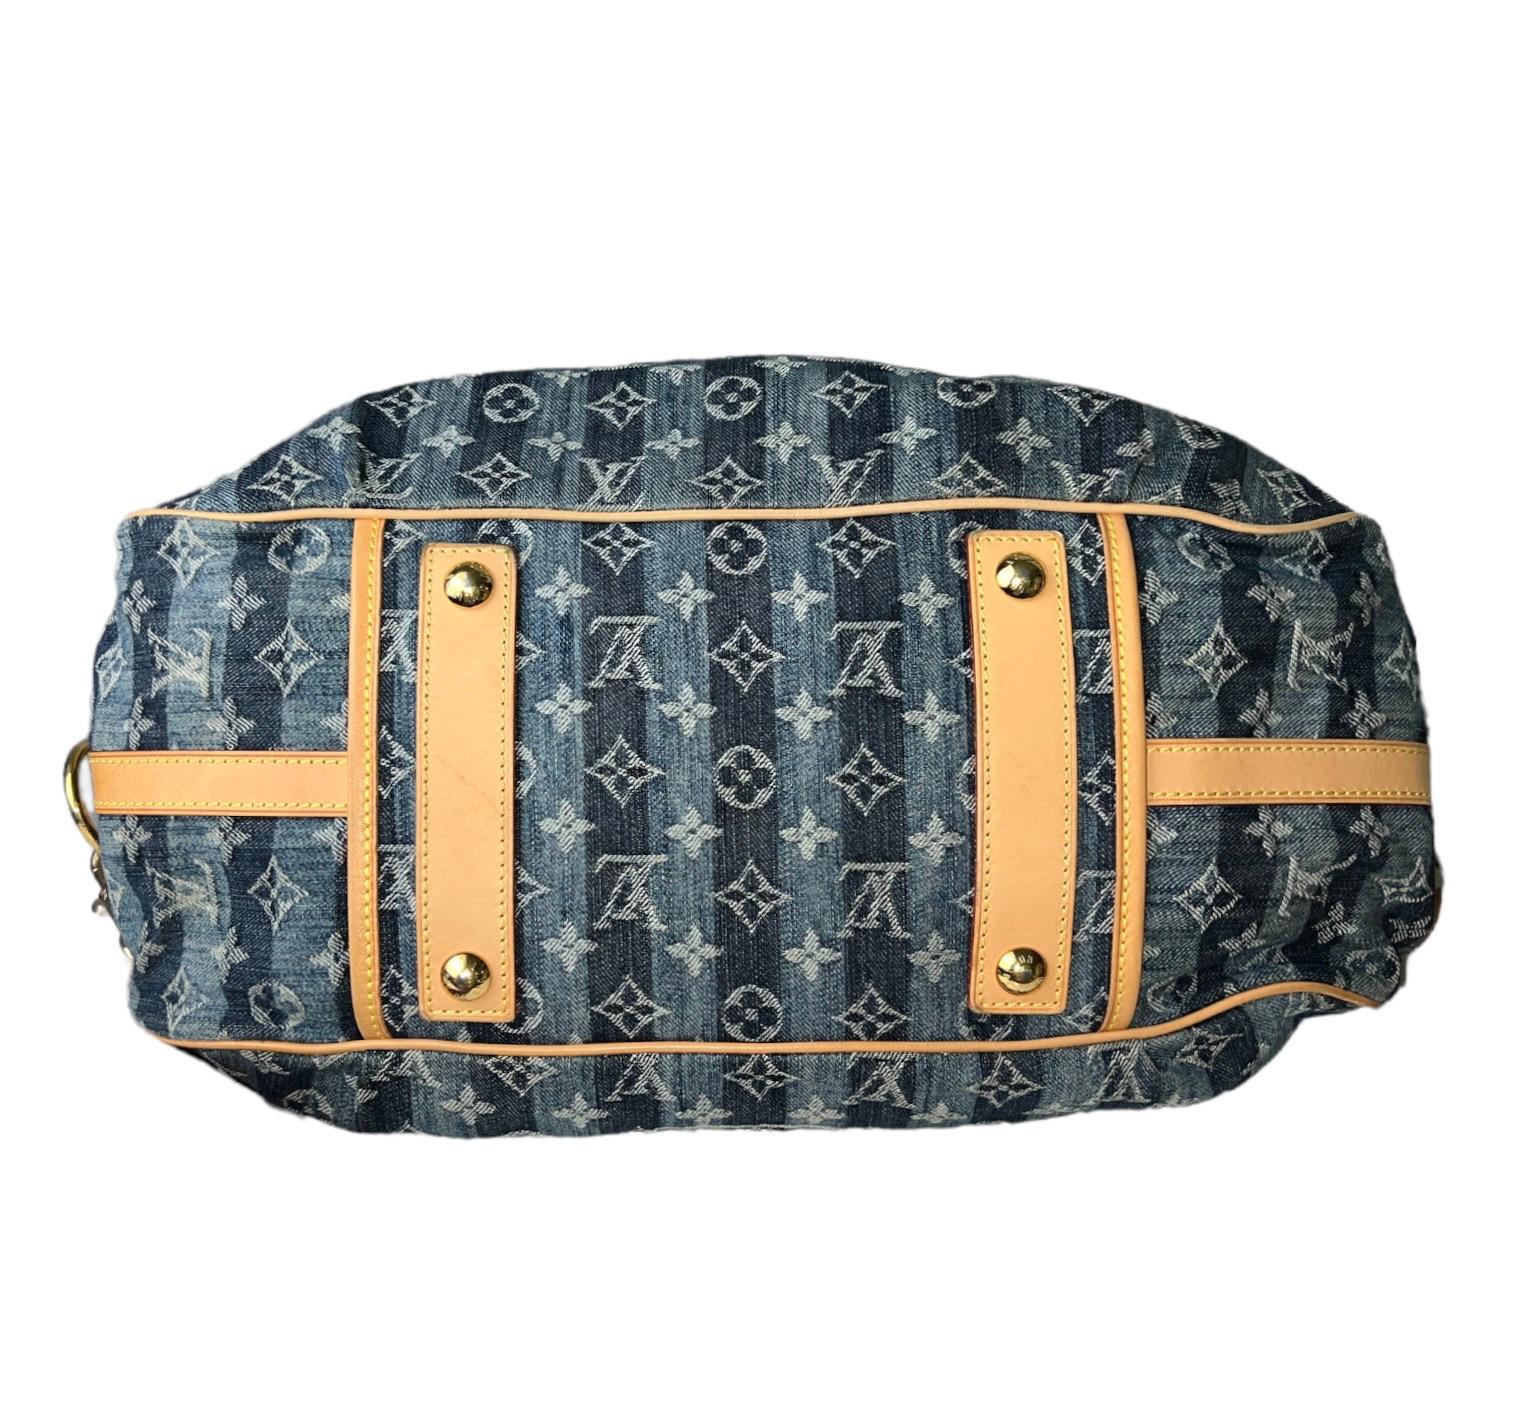 LOUIS VUITTON Monogram Denim Trunks & Bags Travel Shoulder Bag Weekender & Charm 2